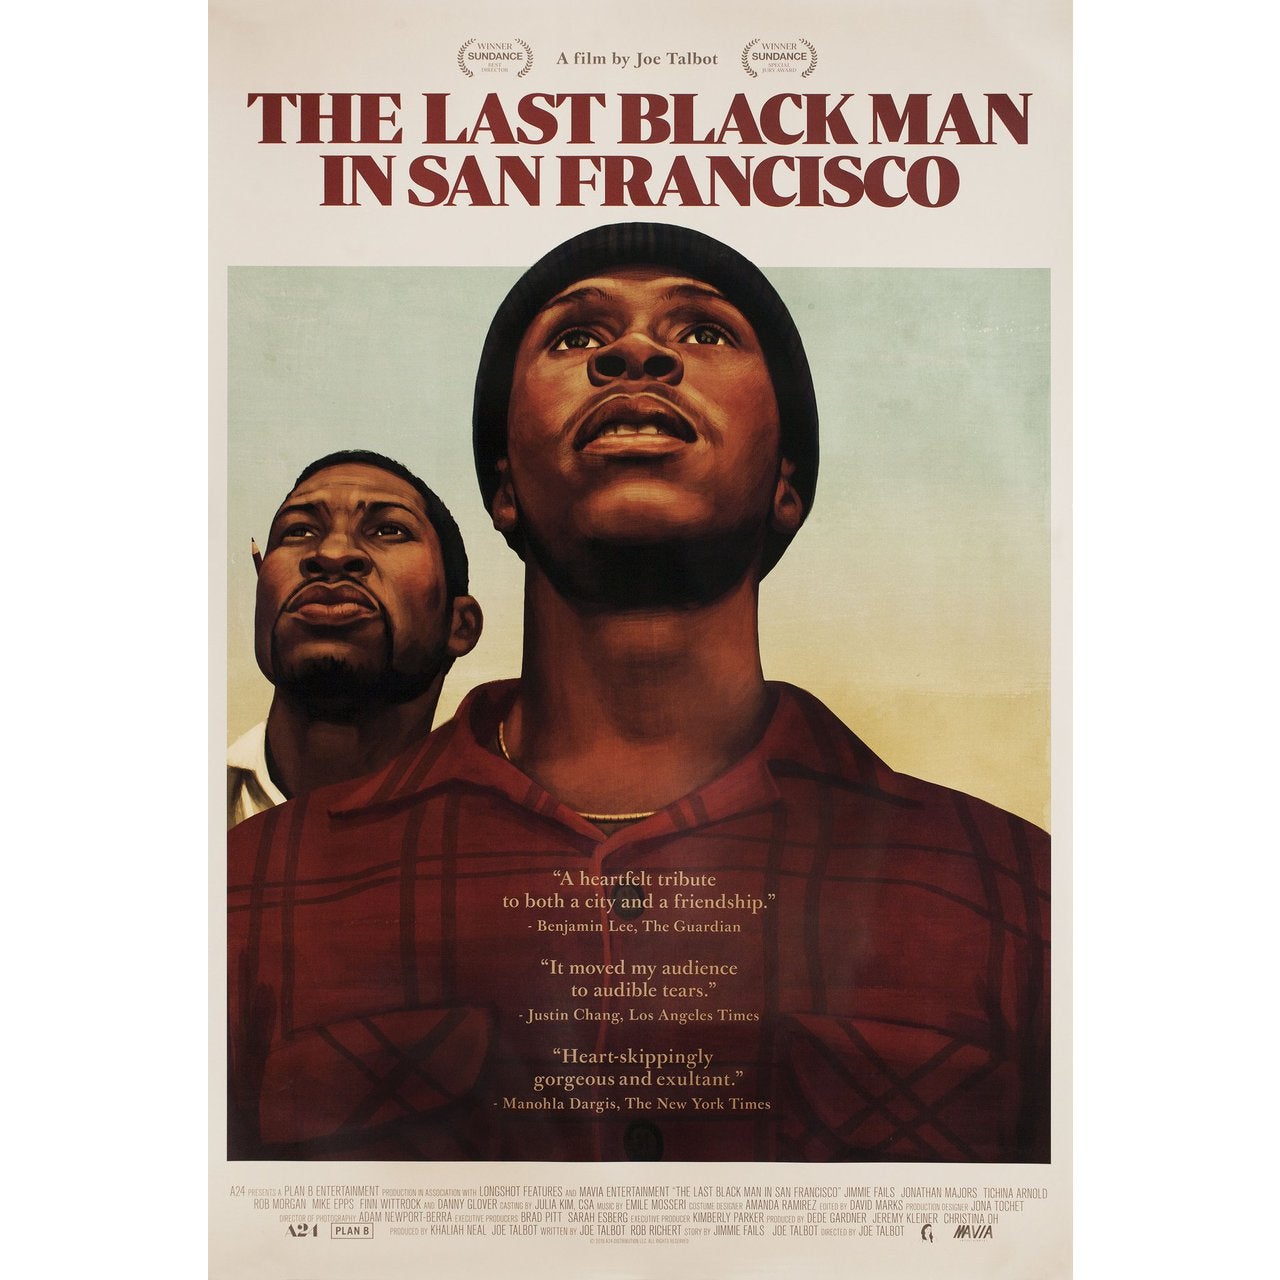 The Last Black Man in San Francisco 2019 U.S. One Sheet Film Poster